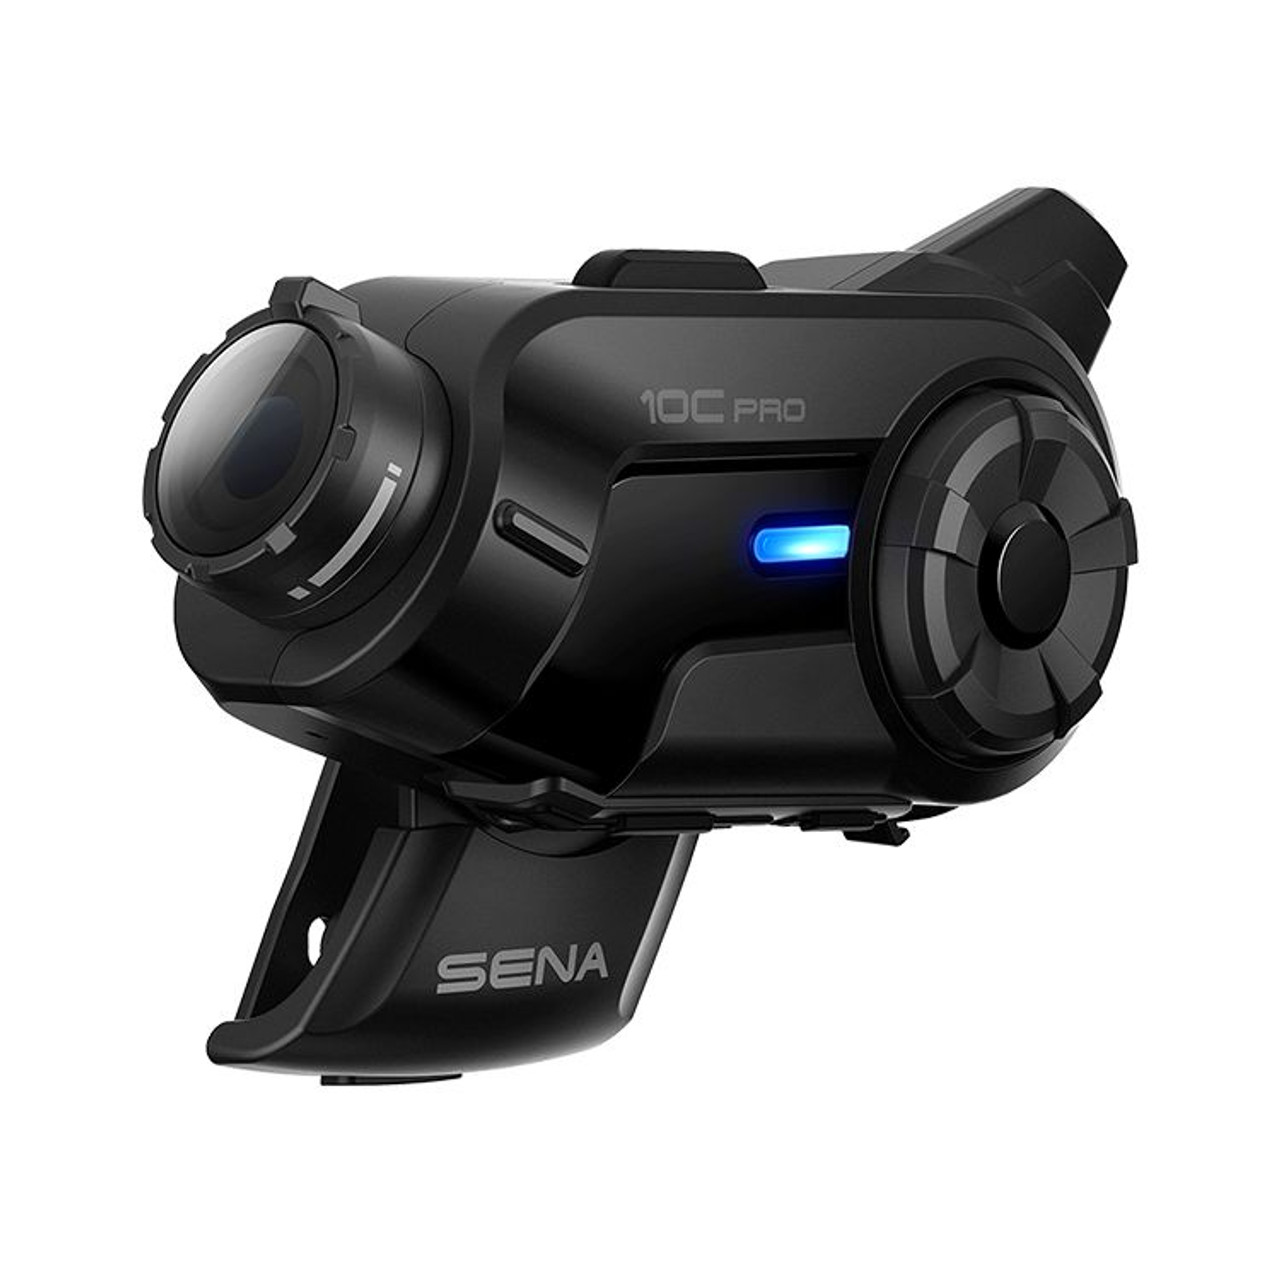 SENA 10c Pro Bluetooth Headset With Camera - Hillery Motorsports